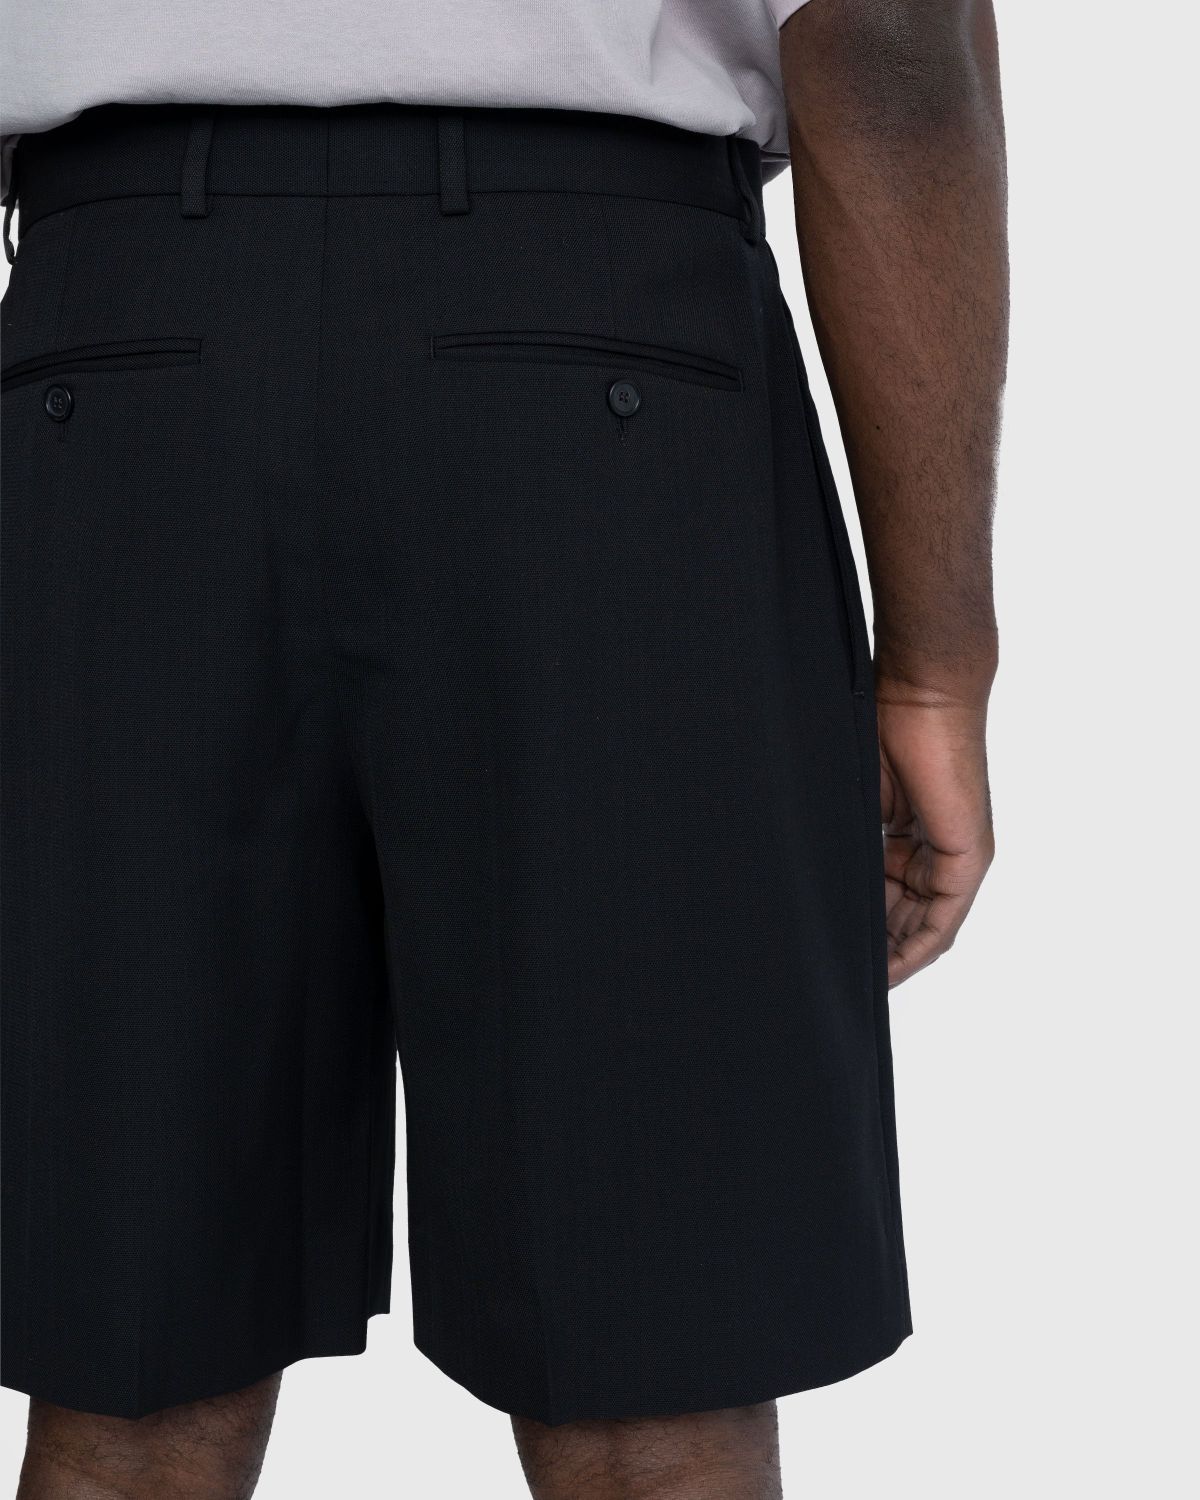 Acne Studios – Tailored Pleated Shorts Black - Shorts - Black - Image 5